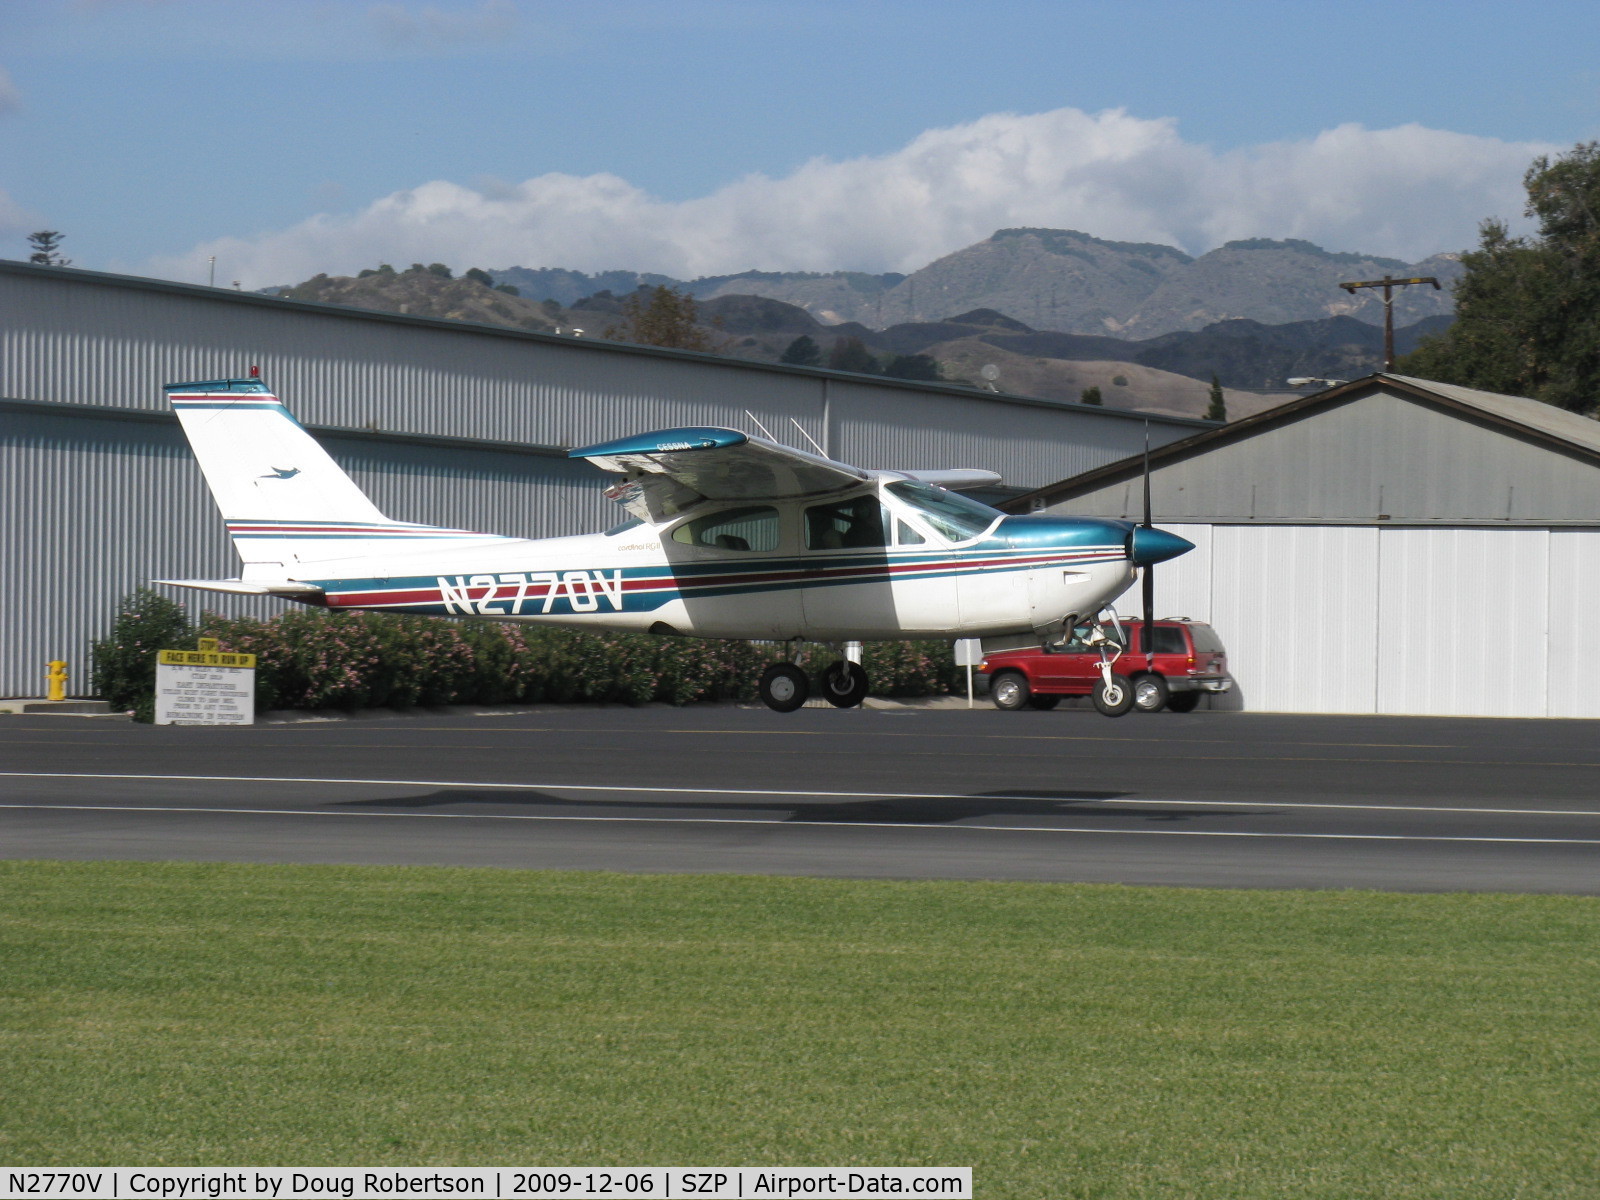 N2770V, 1975 Cessna 177RG Cardinal C/N 177RG0693, 1975 Cessna 177RG CARDINAL, Lycoming IO-360-A1B6D 200 Hp, CS prop, landing Rwy 04